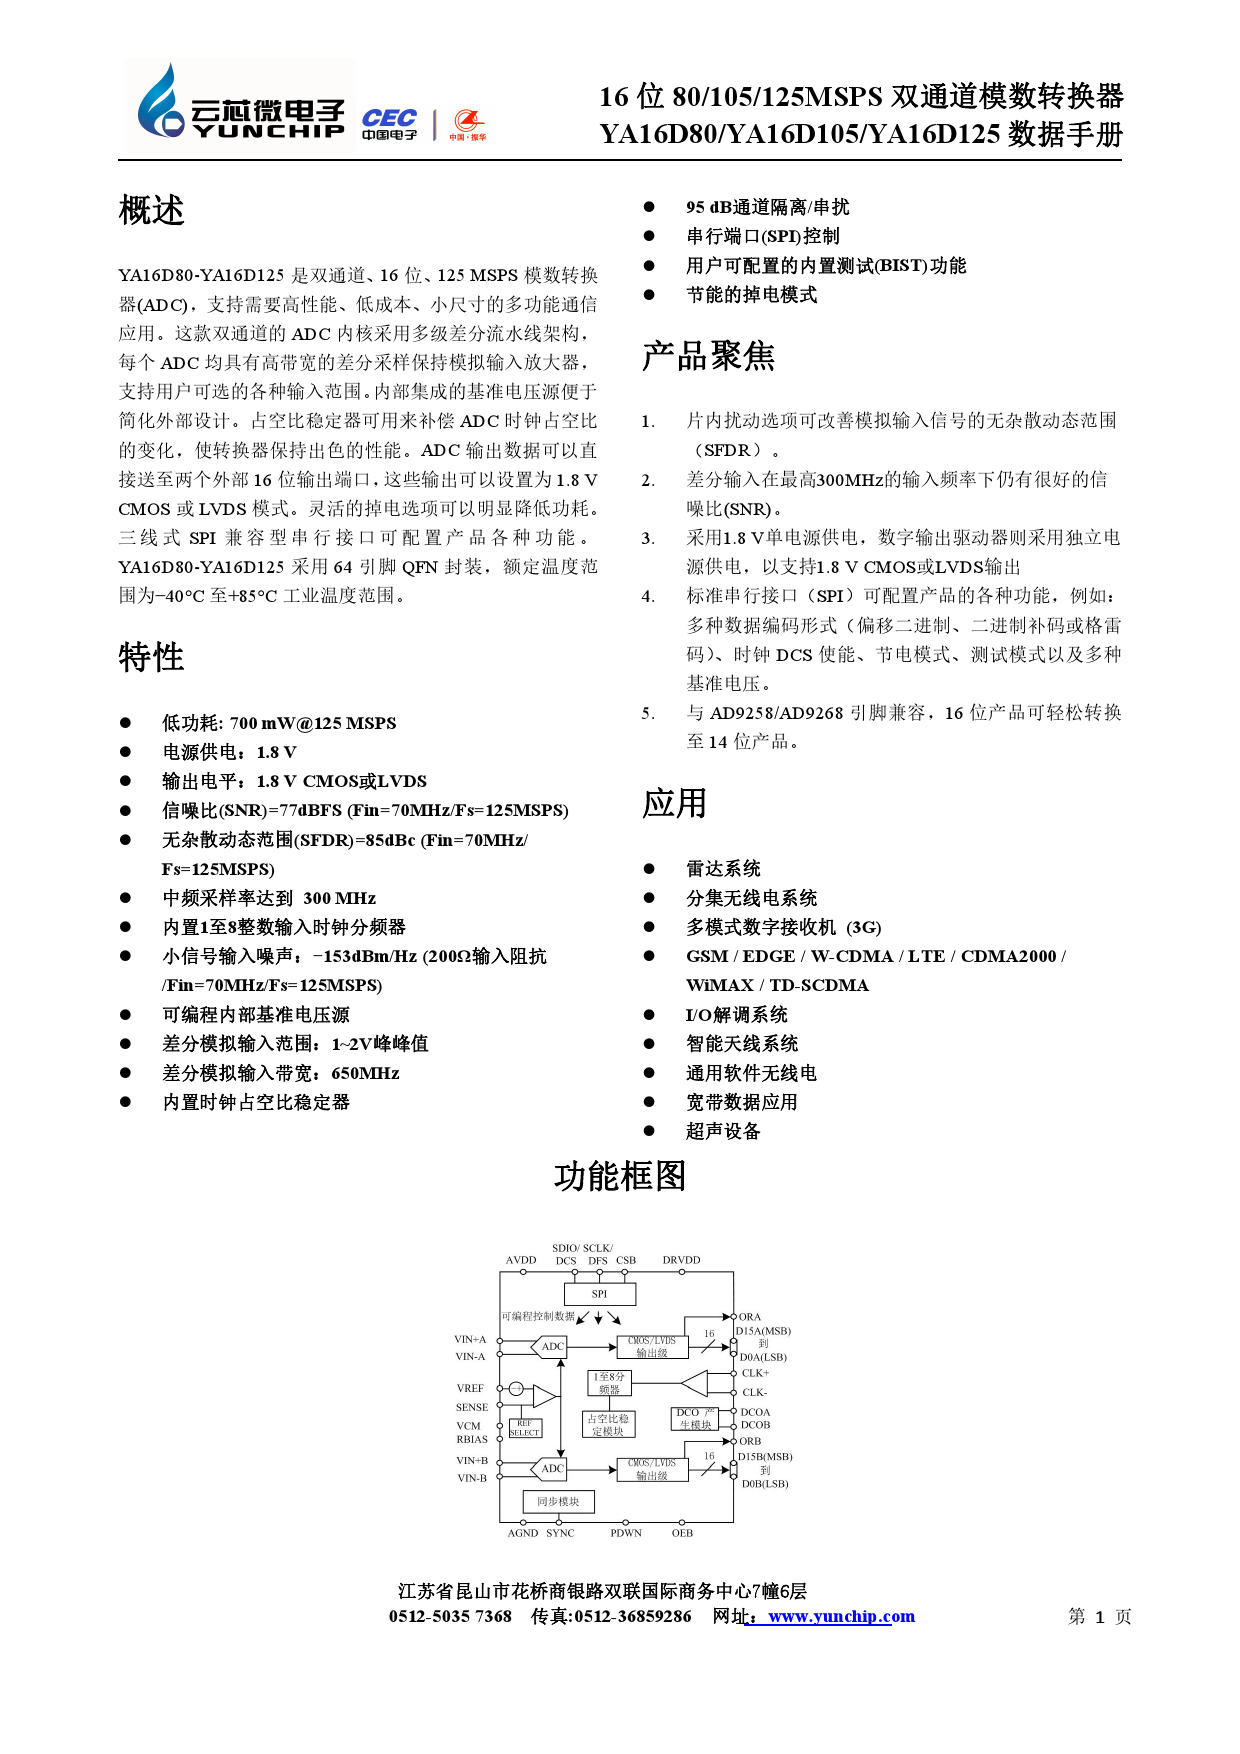 Ya16d125（yunchip苏州云芯）ya16d125中文资料价格pdf手册 立创电子商城 2587